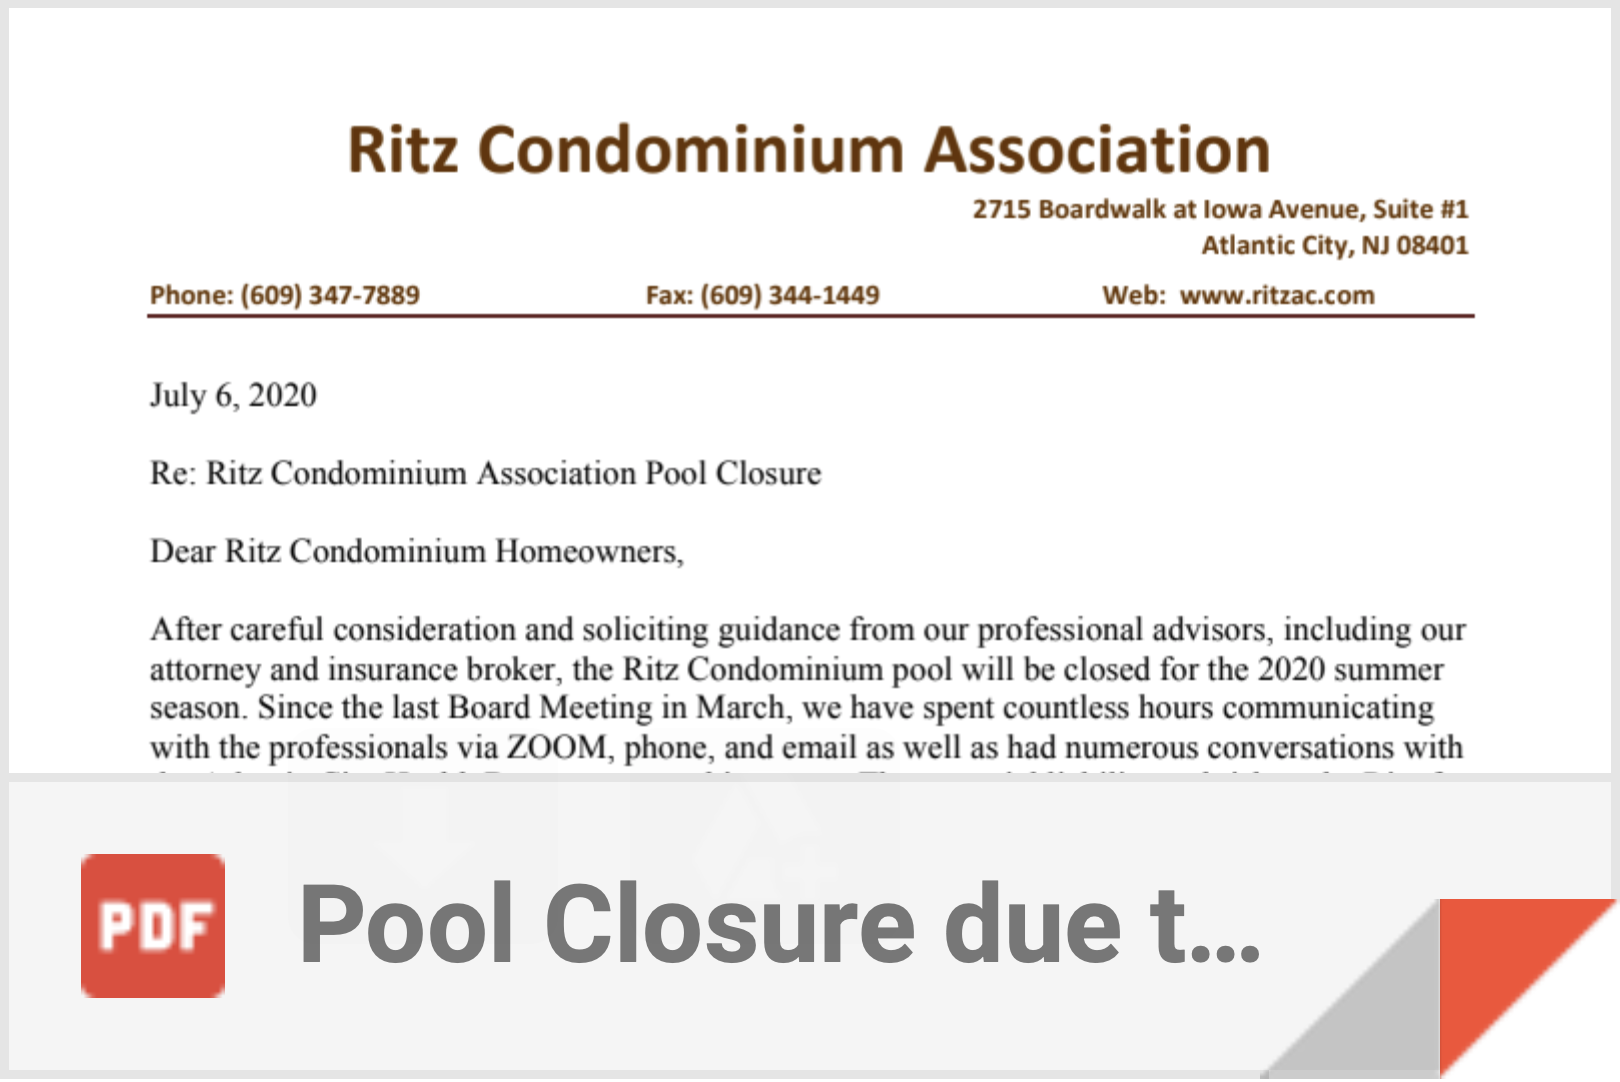 Pool Closure due to COVID-19